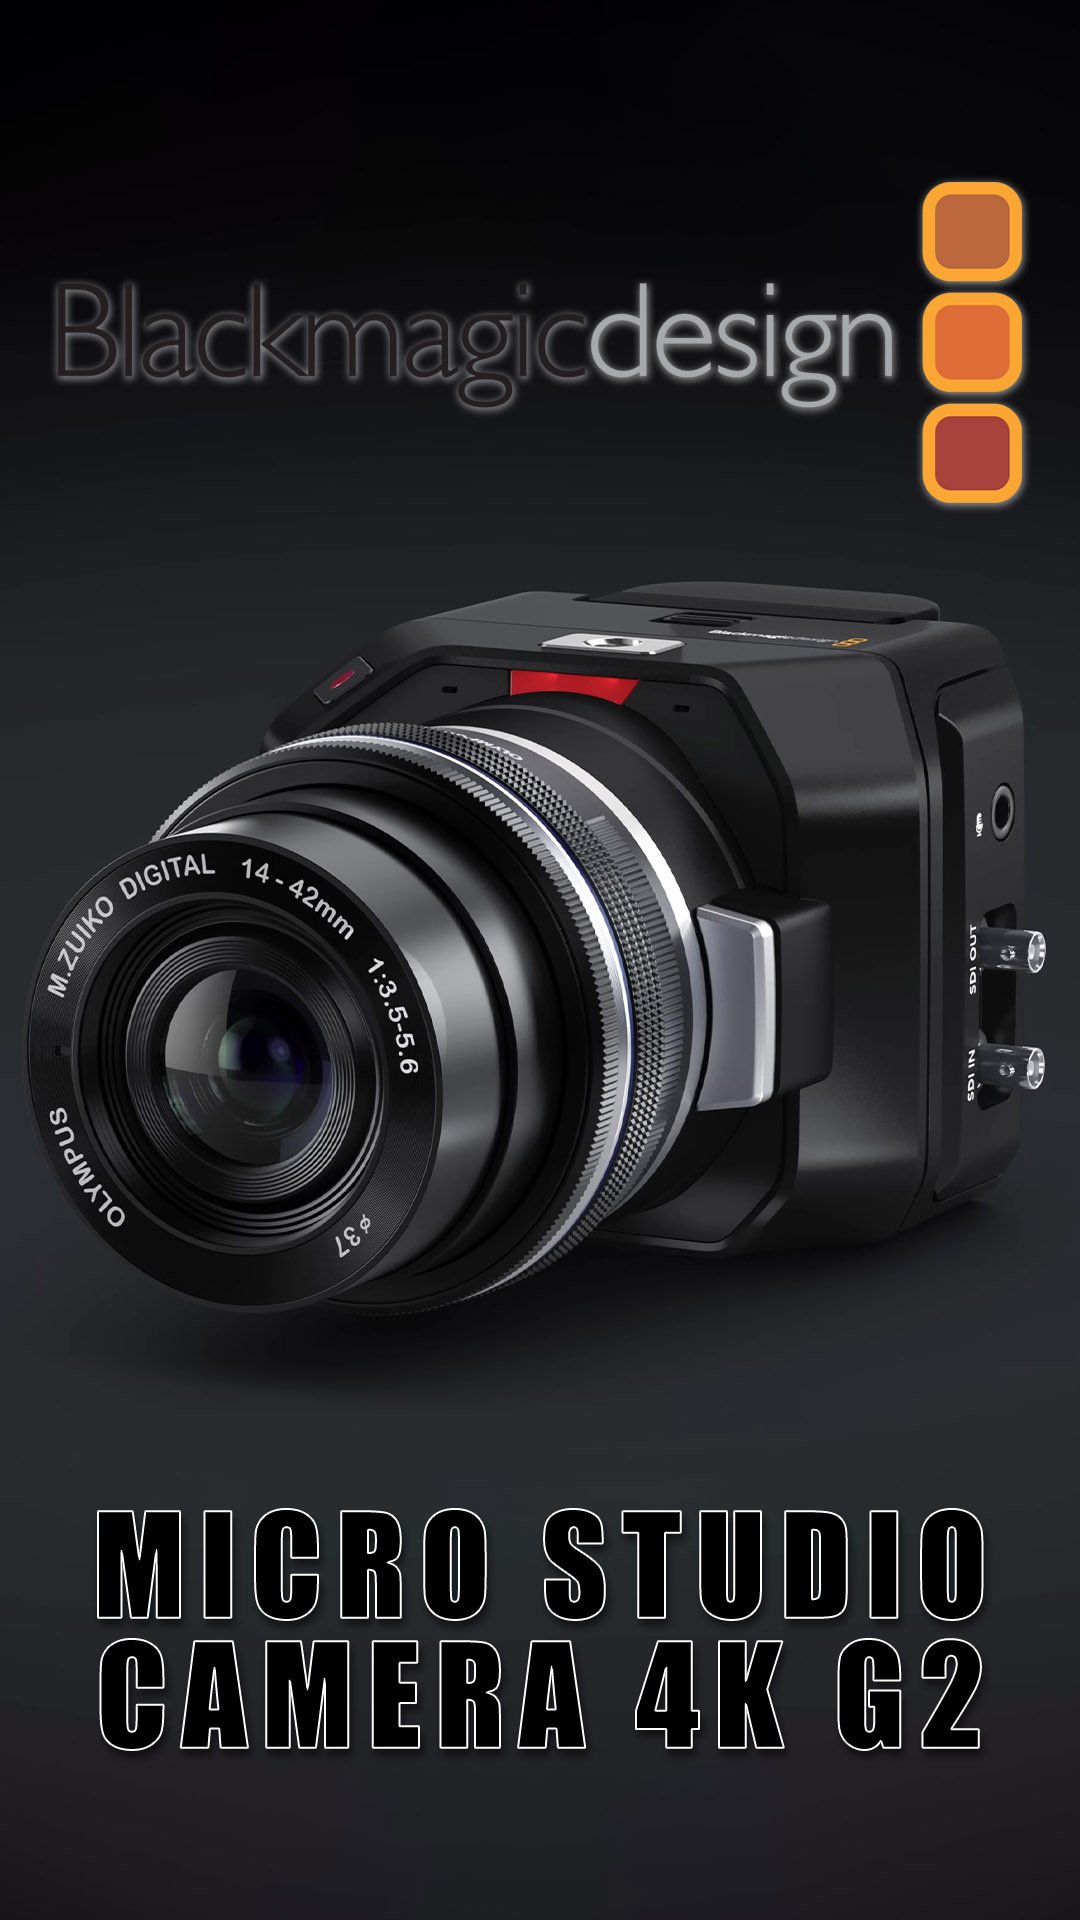 #MicroStudioCamera4KG2 - компактная вещательная камера от #BlackmagicDesign